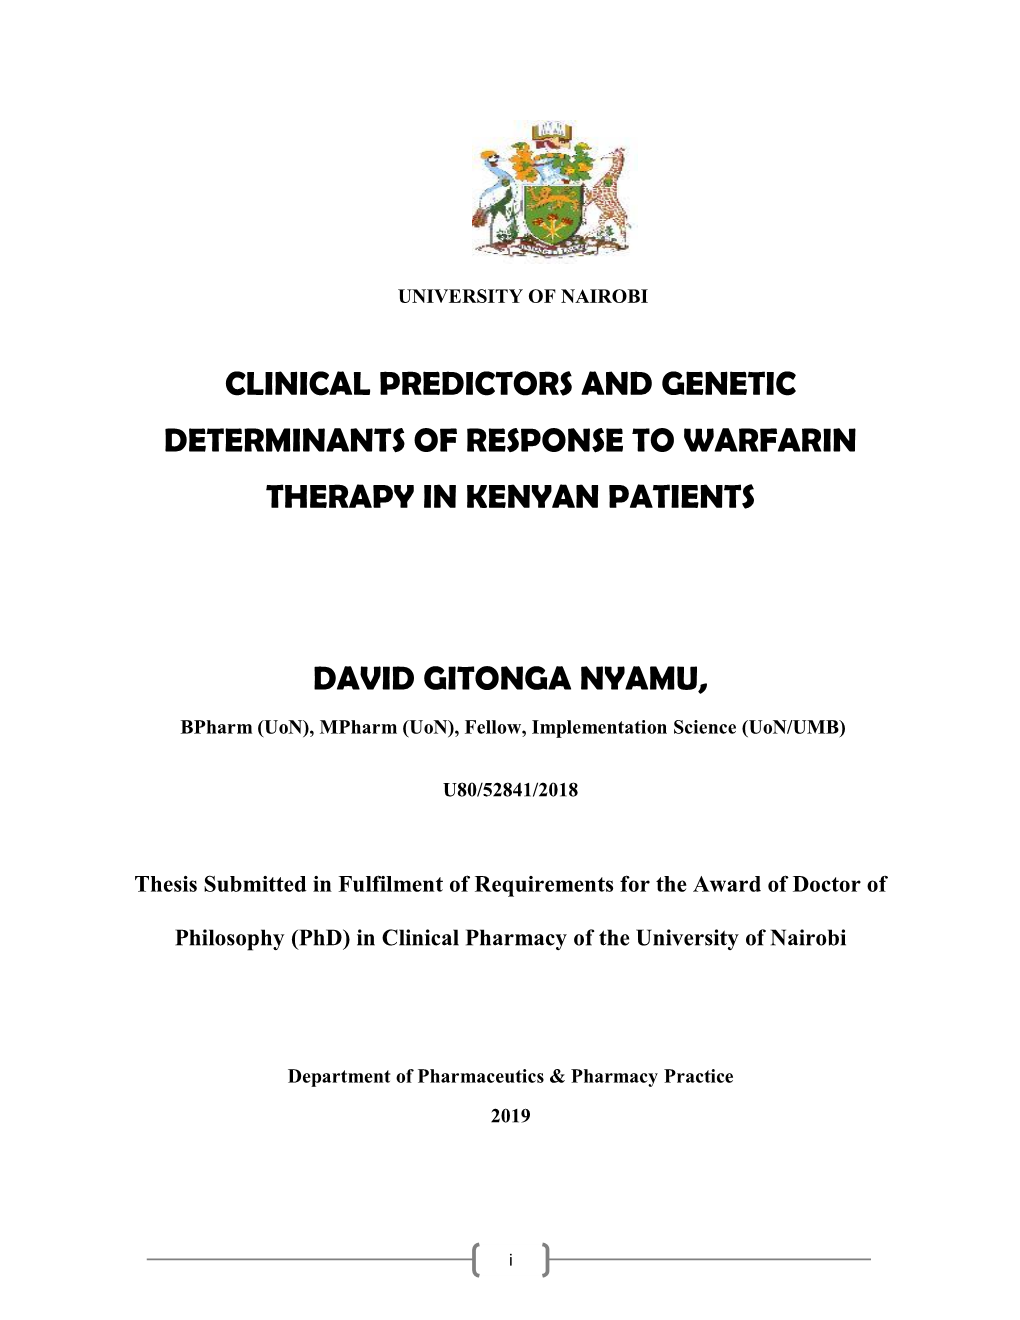 Clinical Predictors and Genetic Determinants of Response to Warfarin Therapy in Kenyan Patients David Gitonga Nyamu